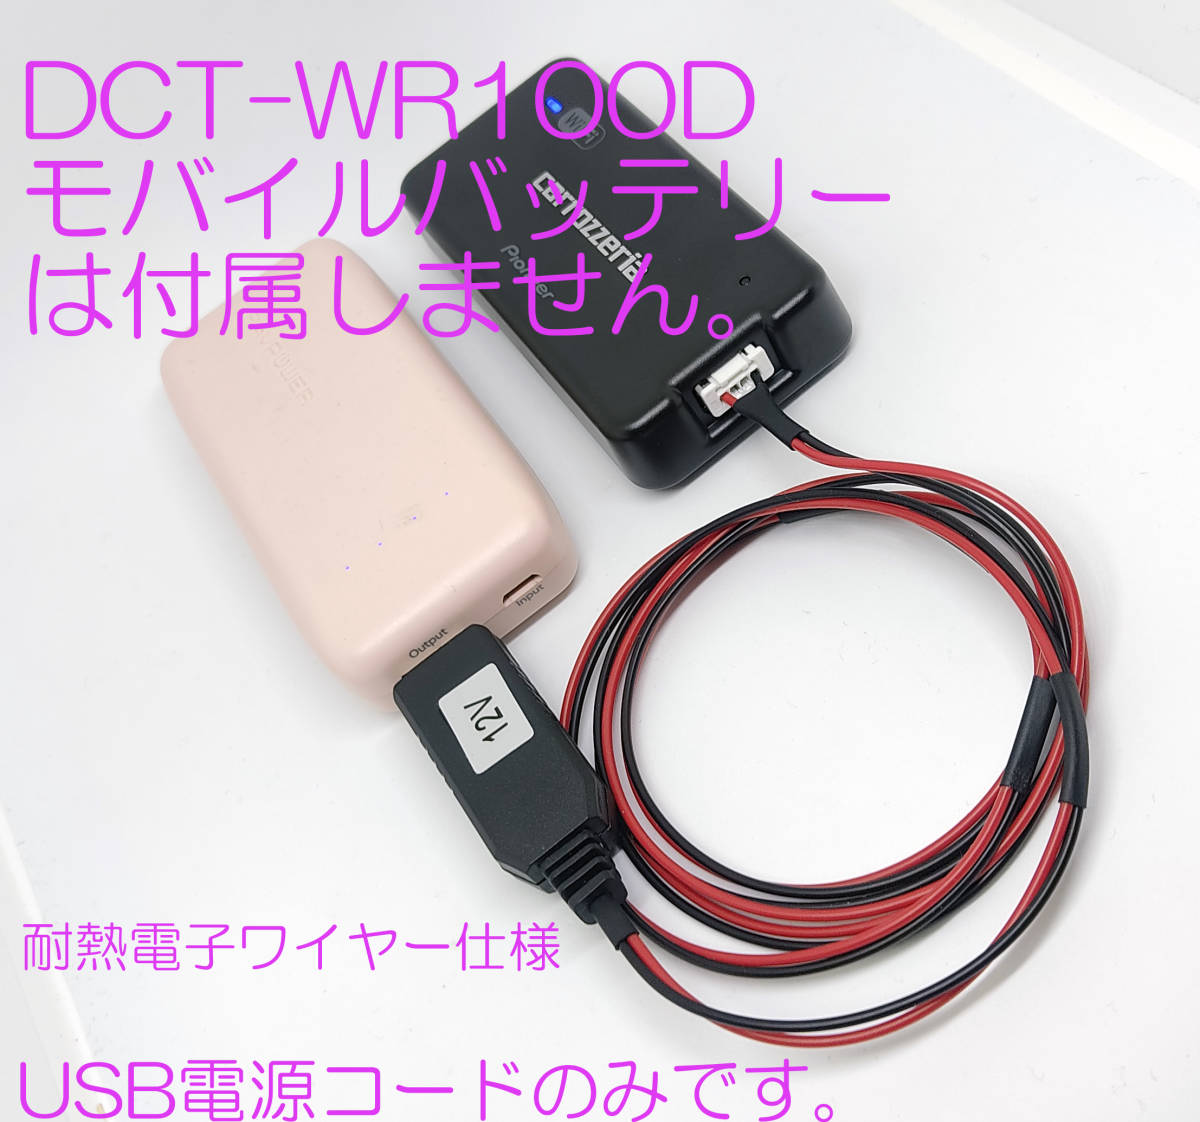 carrozzeria 車載 Wi-Fiルーター DCT-WR100D 用 USB 電源ケーブル 耐熱配線仕様 純正同等部品(コネクタ）モバイルバッテリーで駆動できます_DCT-WR100D/バッテリーは付属しません。